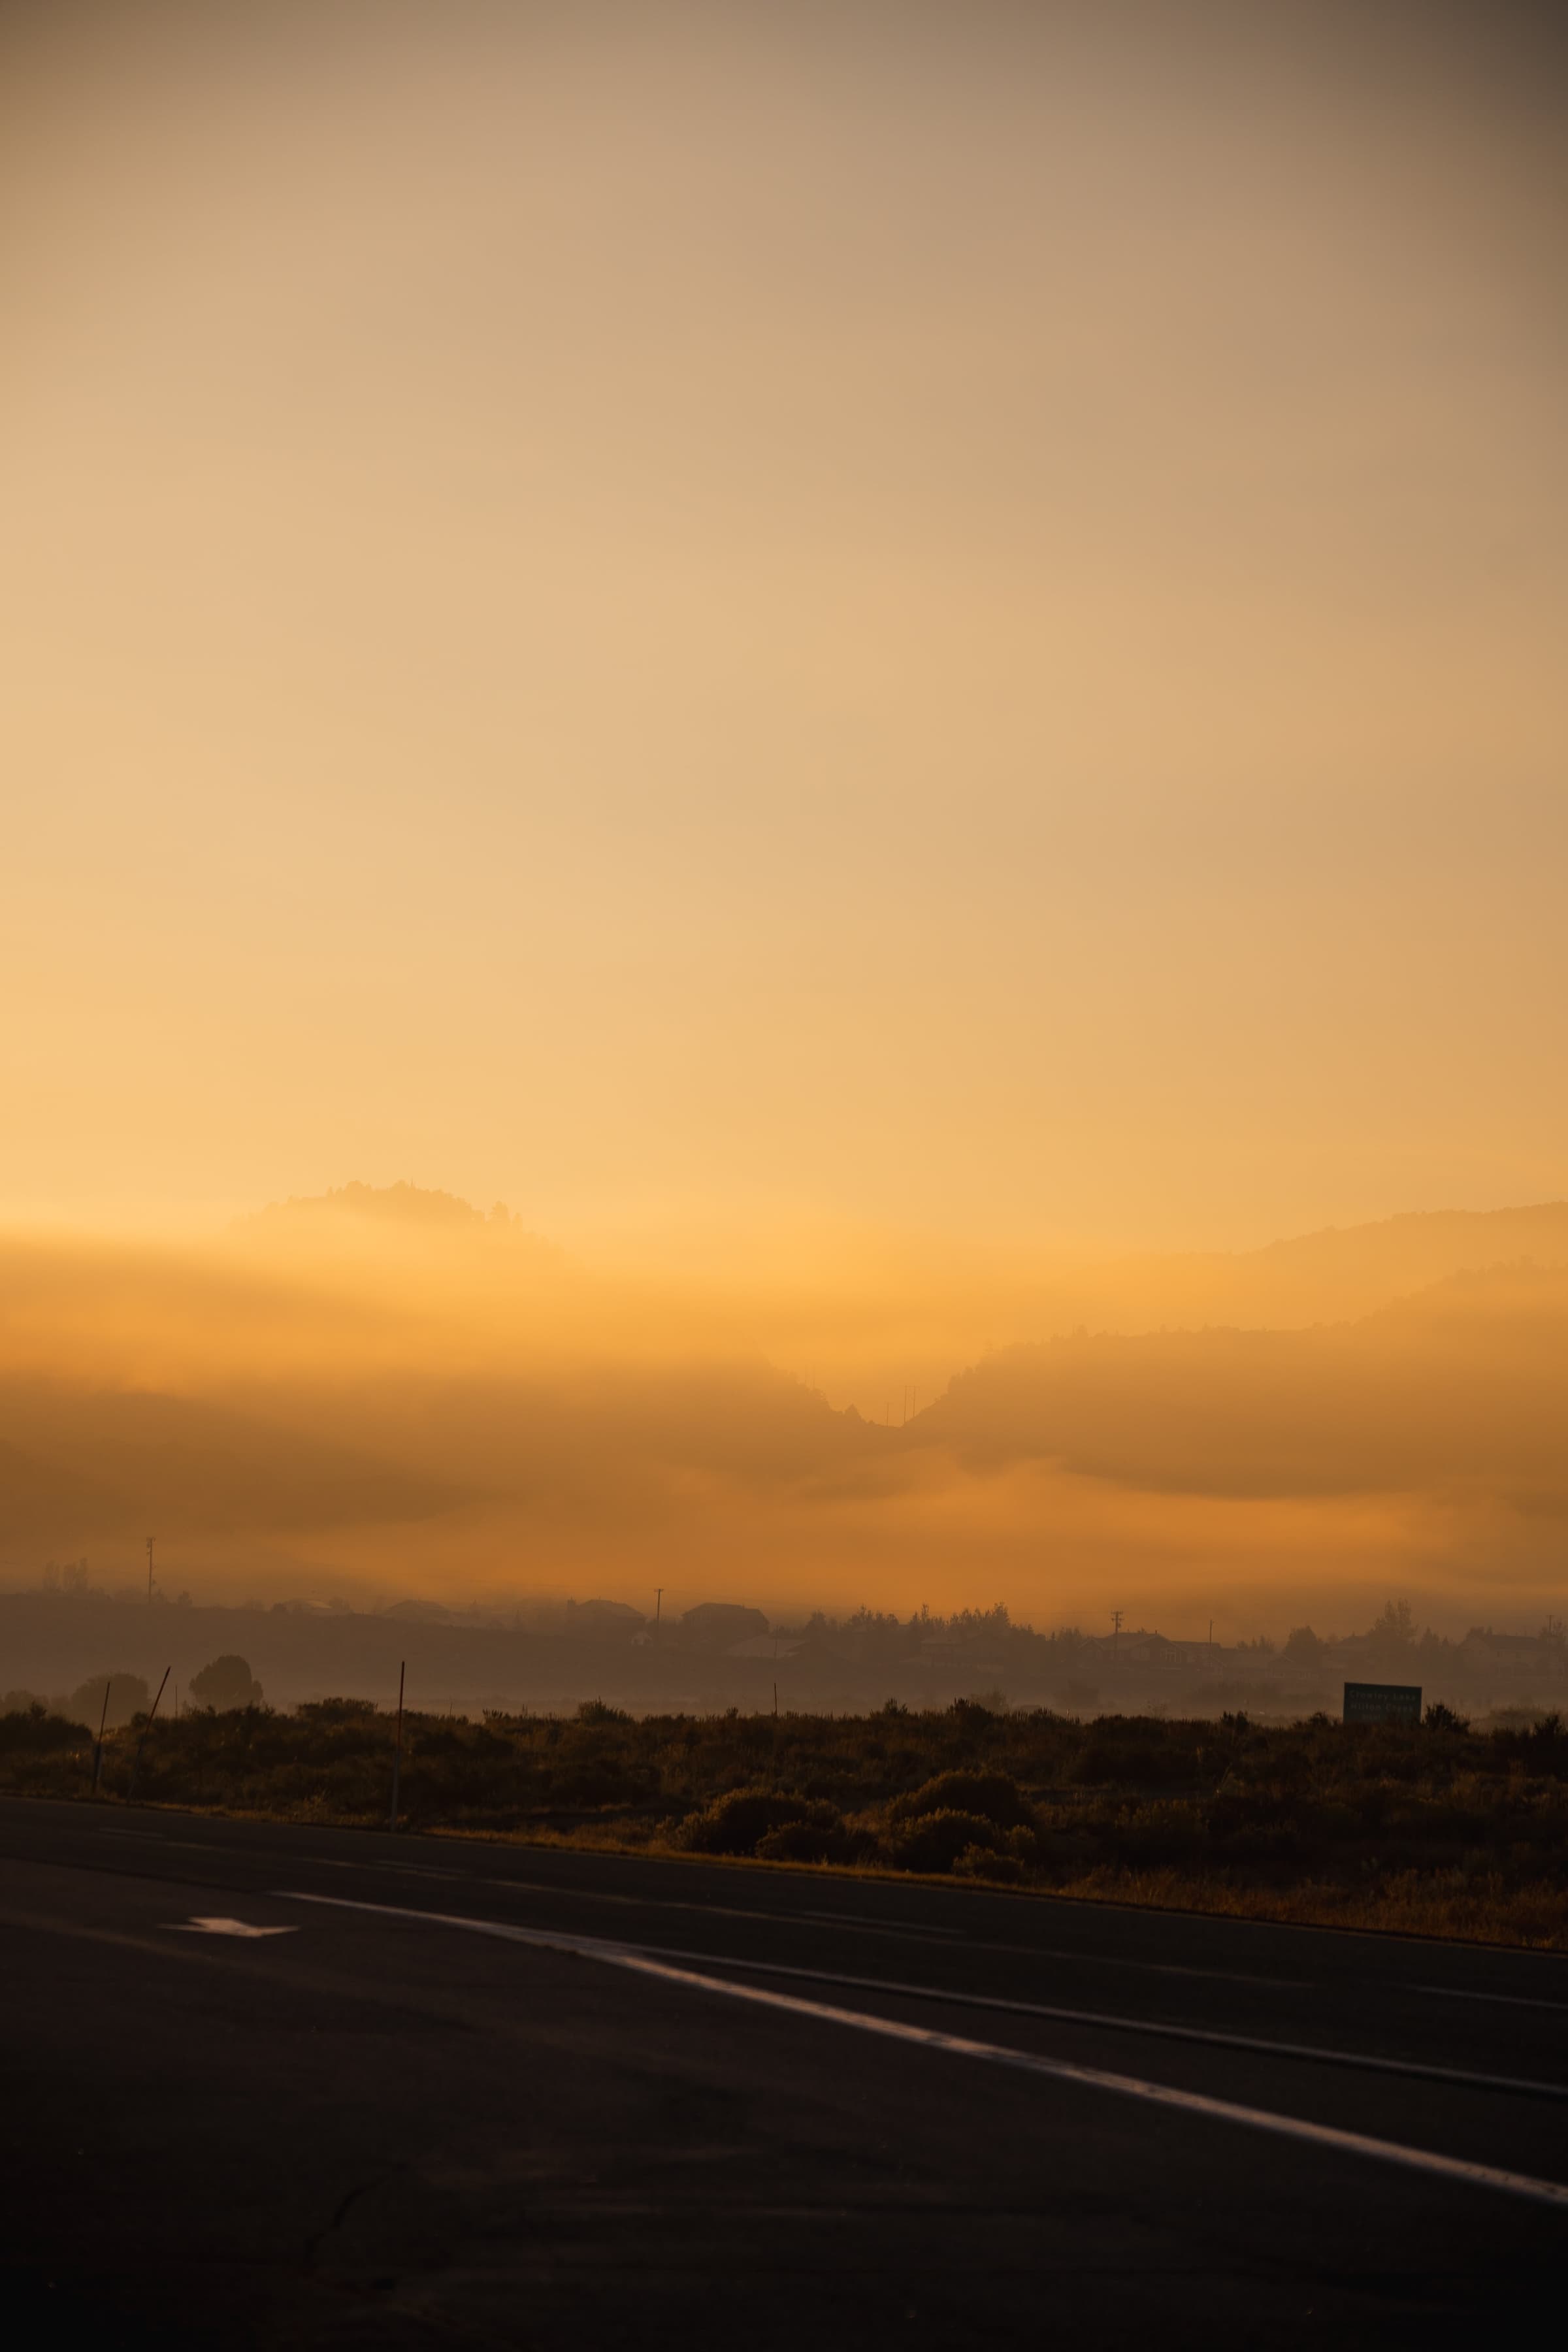 A serene landscape at sunrise with a road leading towards mist-enshrouded hills under a gradient orange sky.